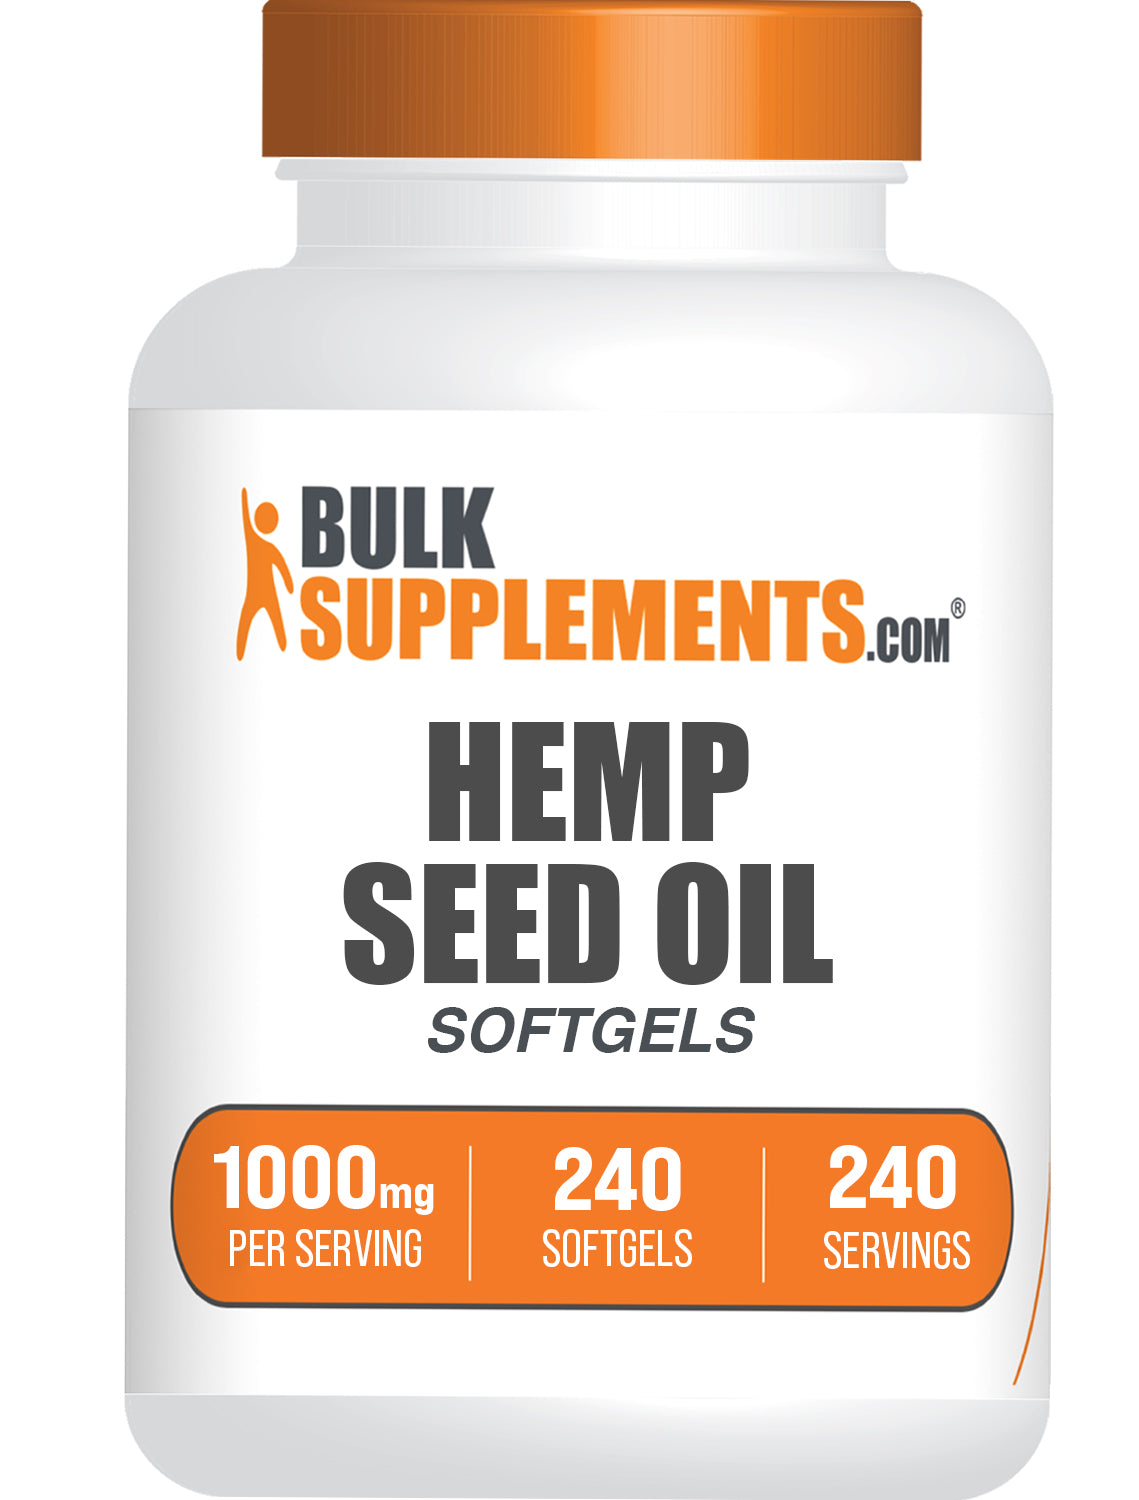 BulkSupplements.com Hemp Seed Oil Softgels 240 ct bottle